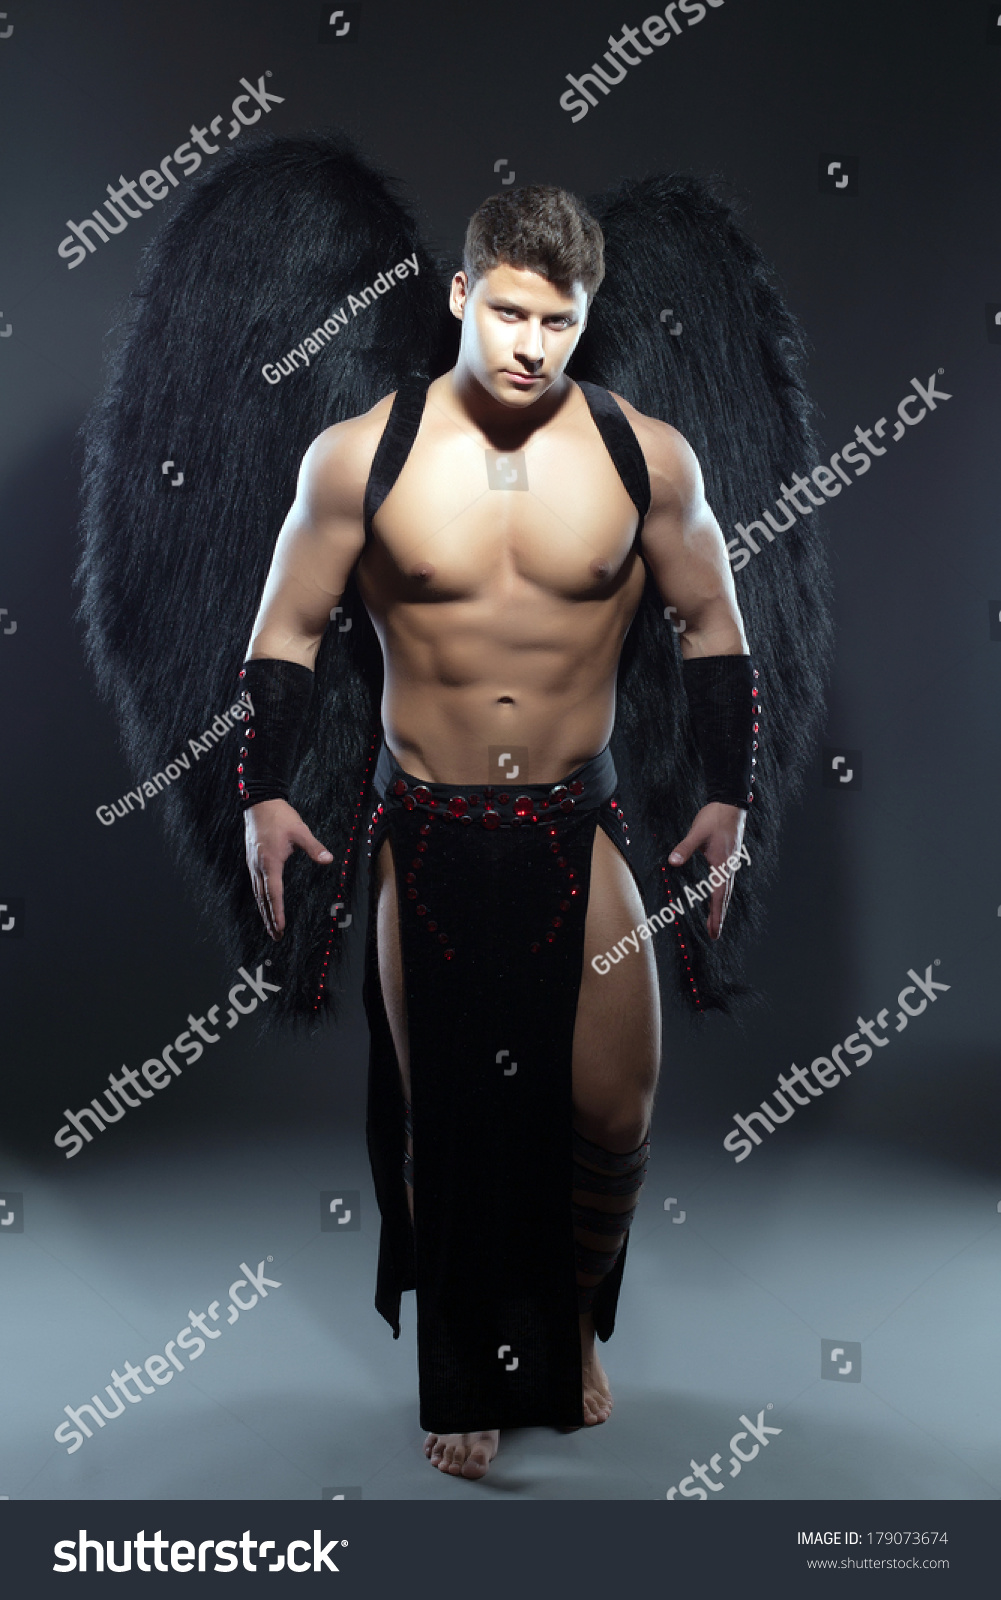 Handsome Muscular Guy Posing Fallen Angel Stock Photo 179073674 ...